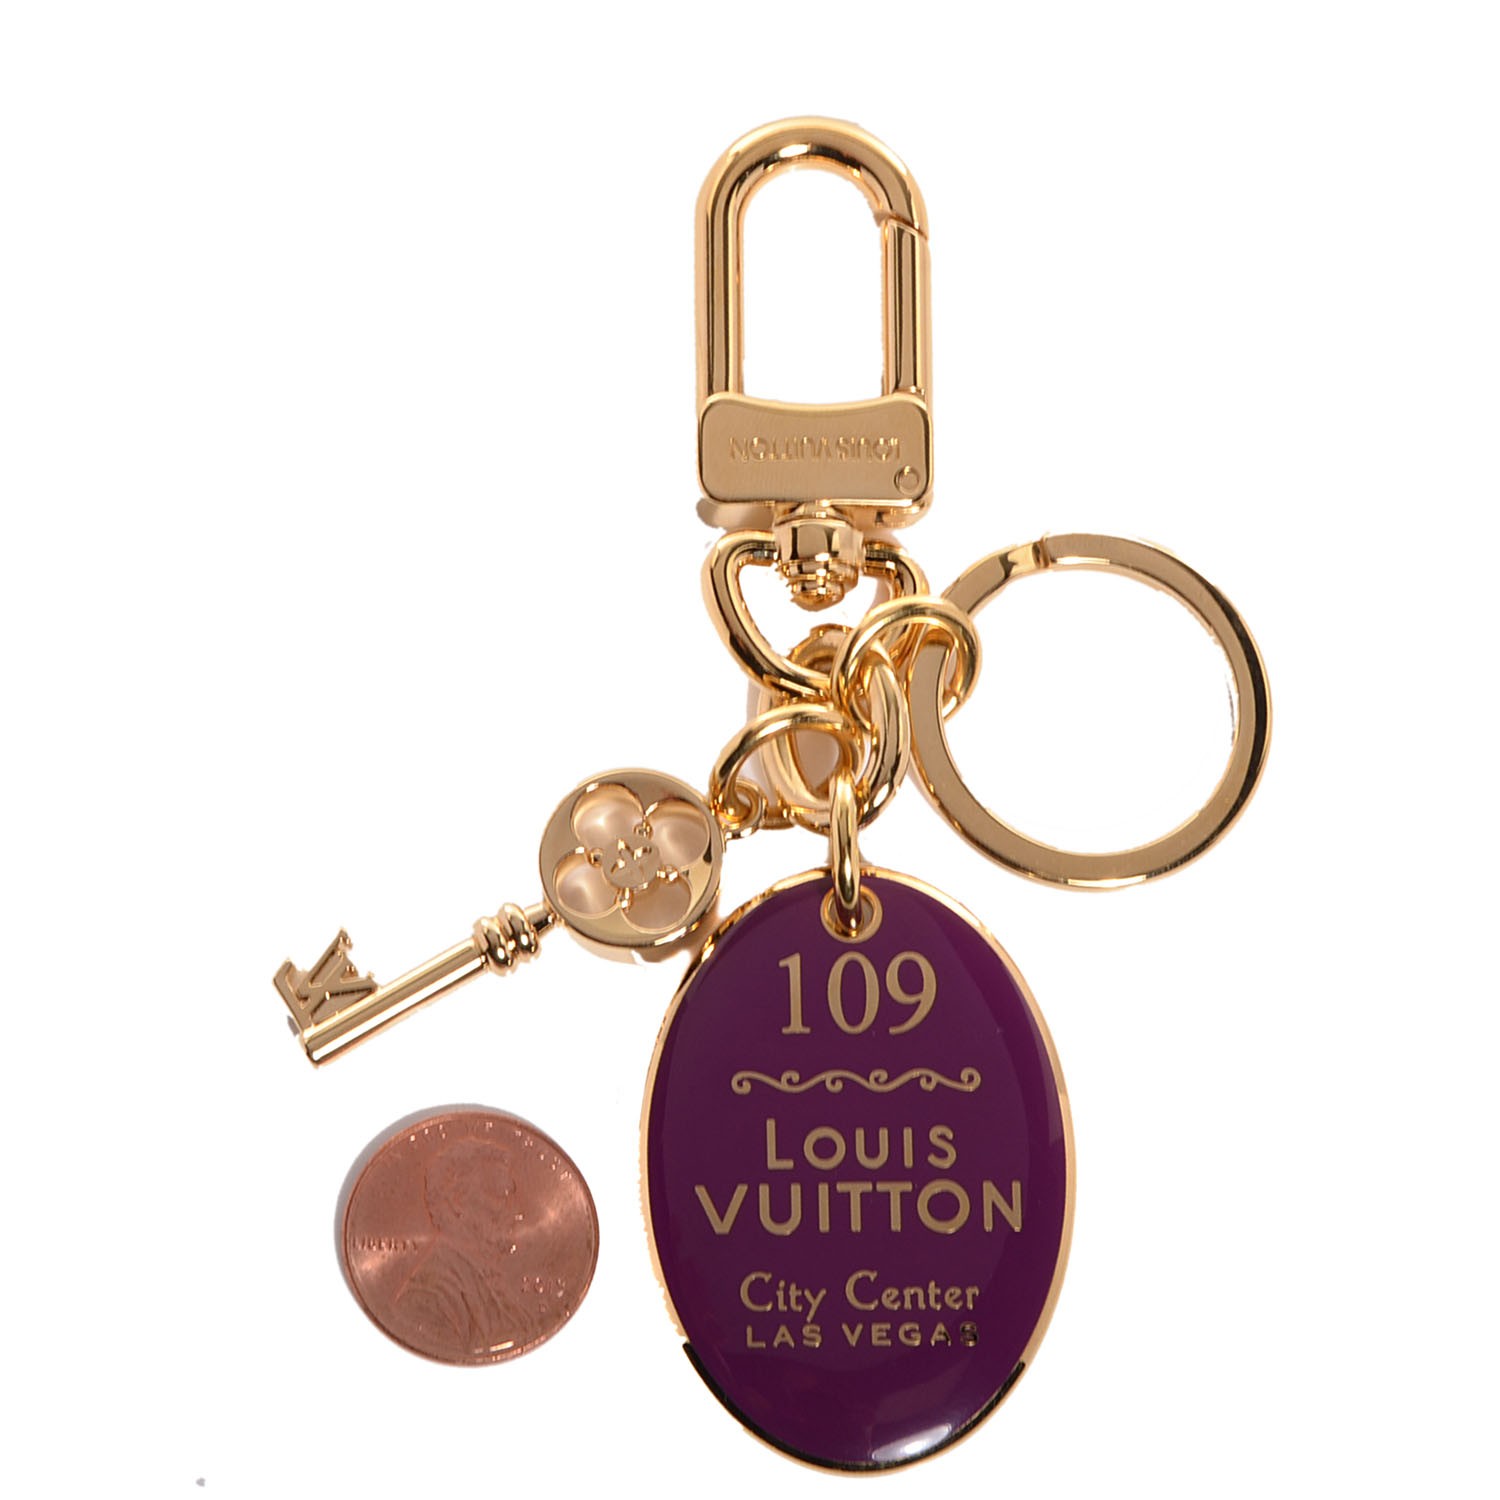 Louis Vuitton Handbags In Las Vegas Outlets | IQS Executive